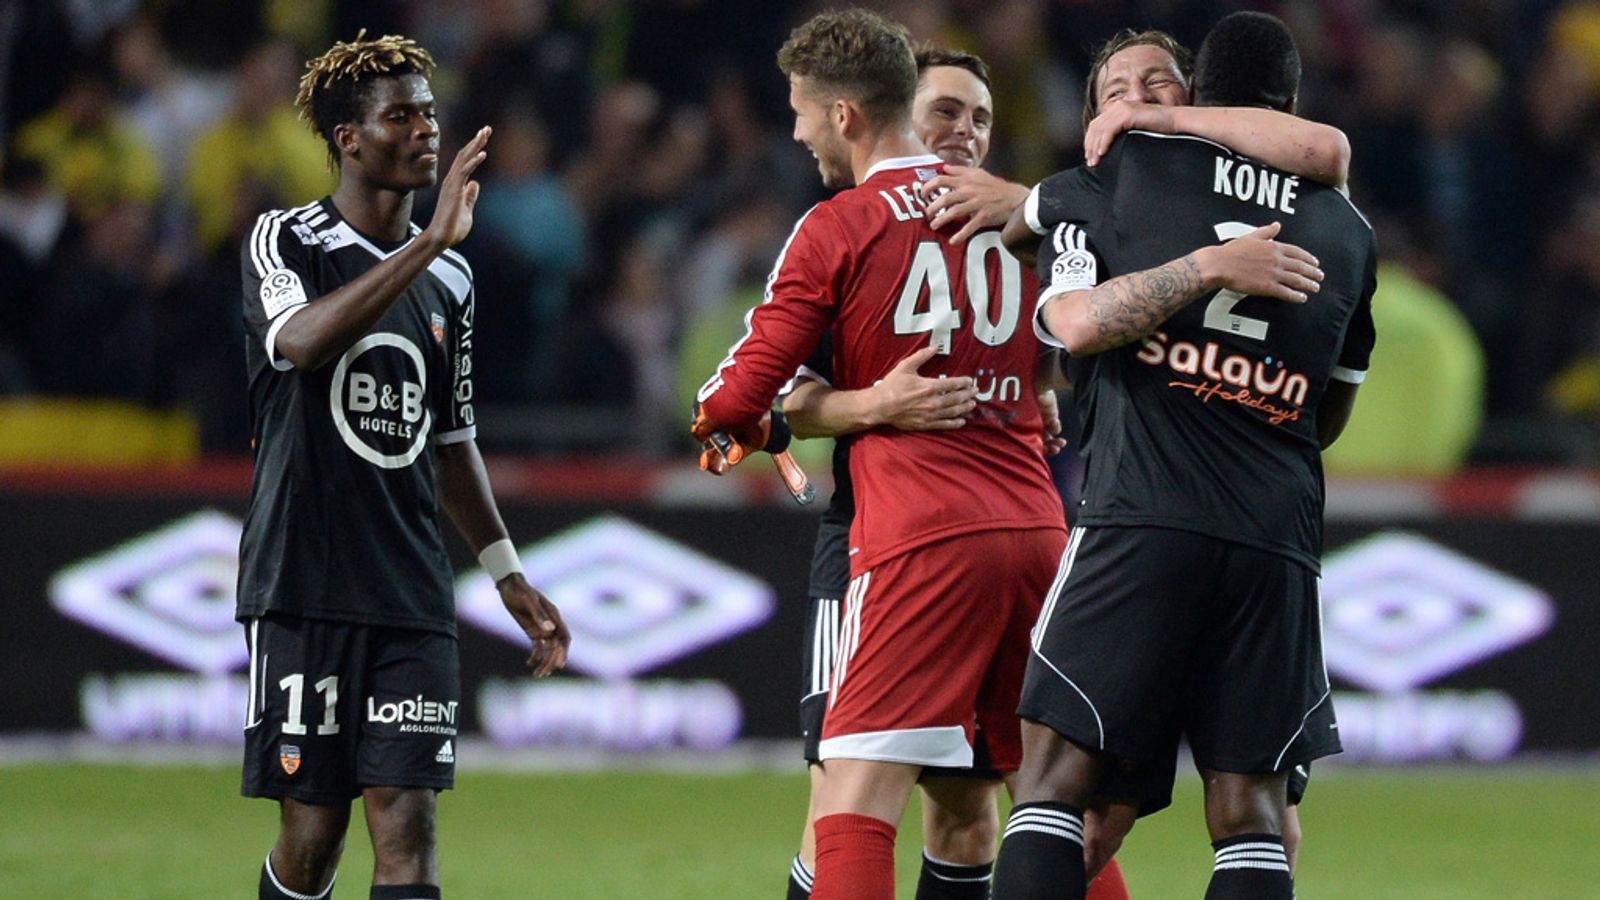 Nantes 1 - 1 Lorient - Match Report & Highlights